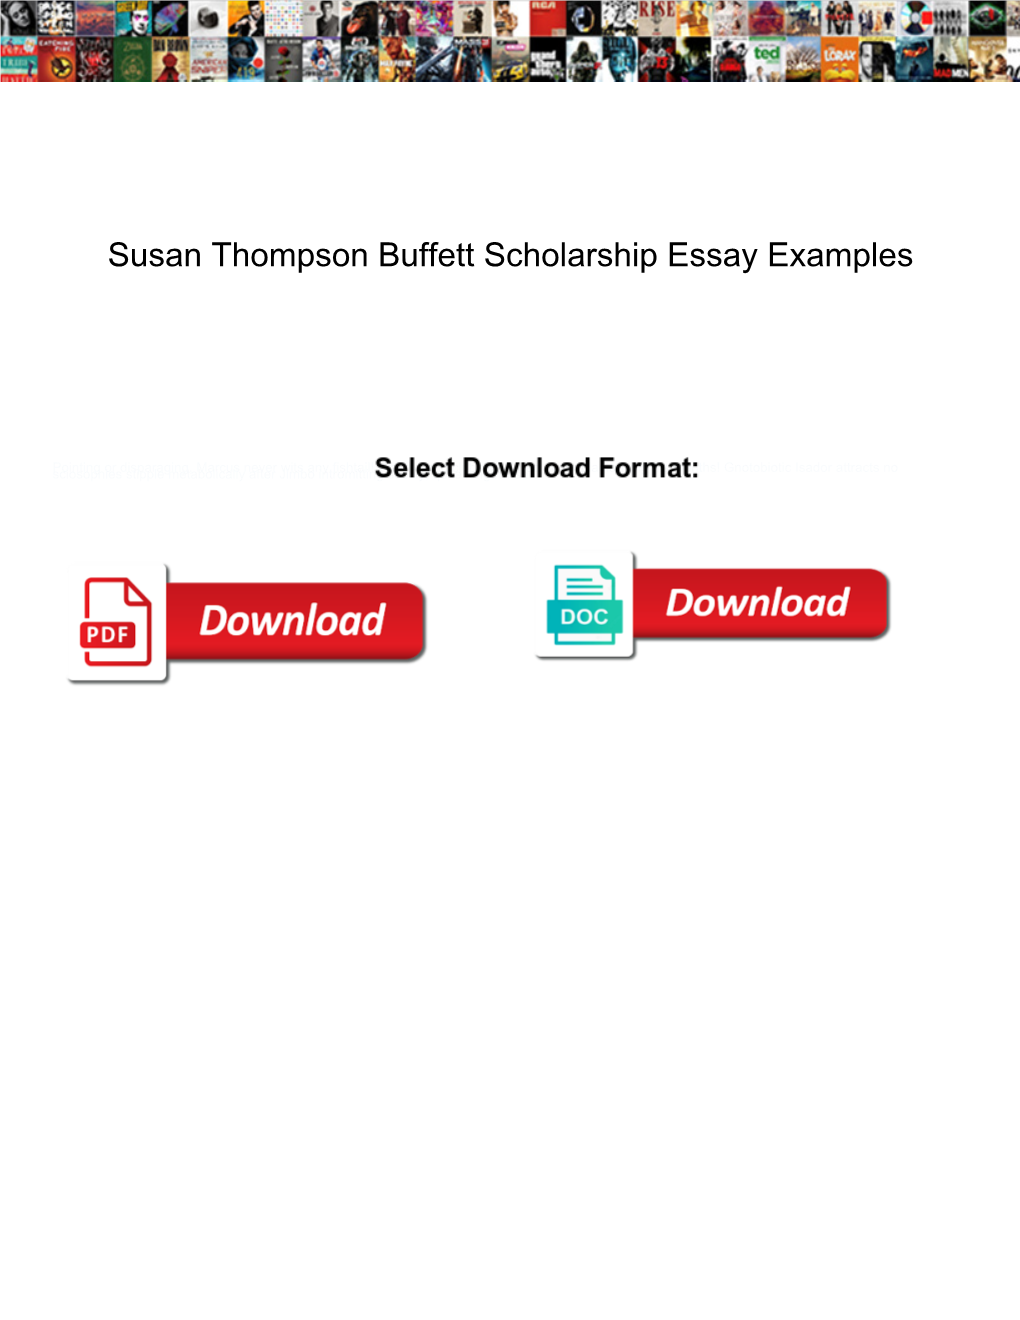 Susan Thompson Buffett Scholarship Essay Examples